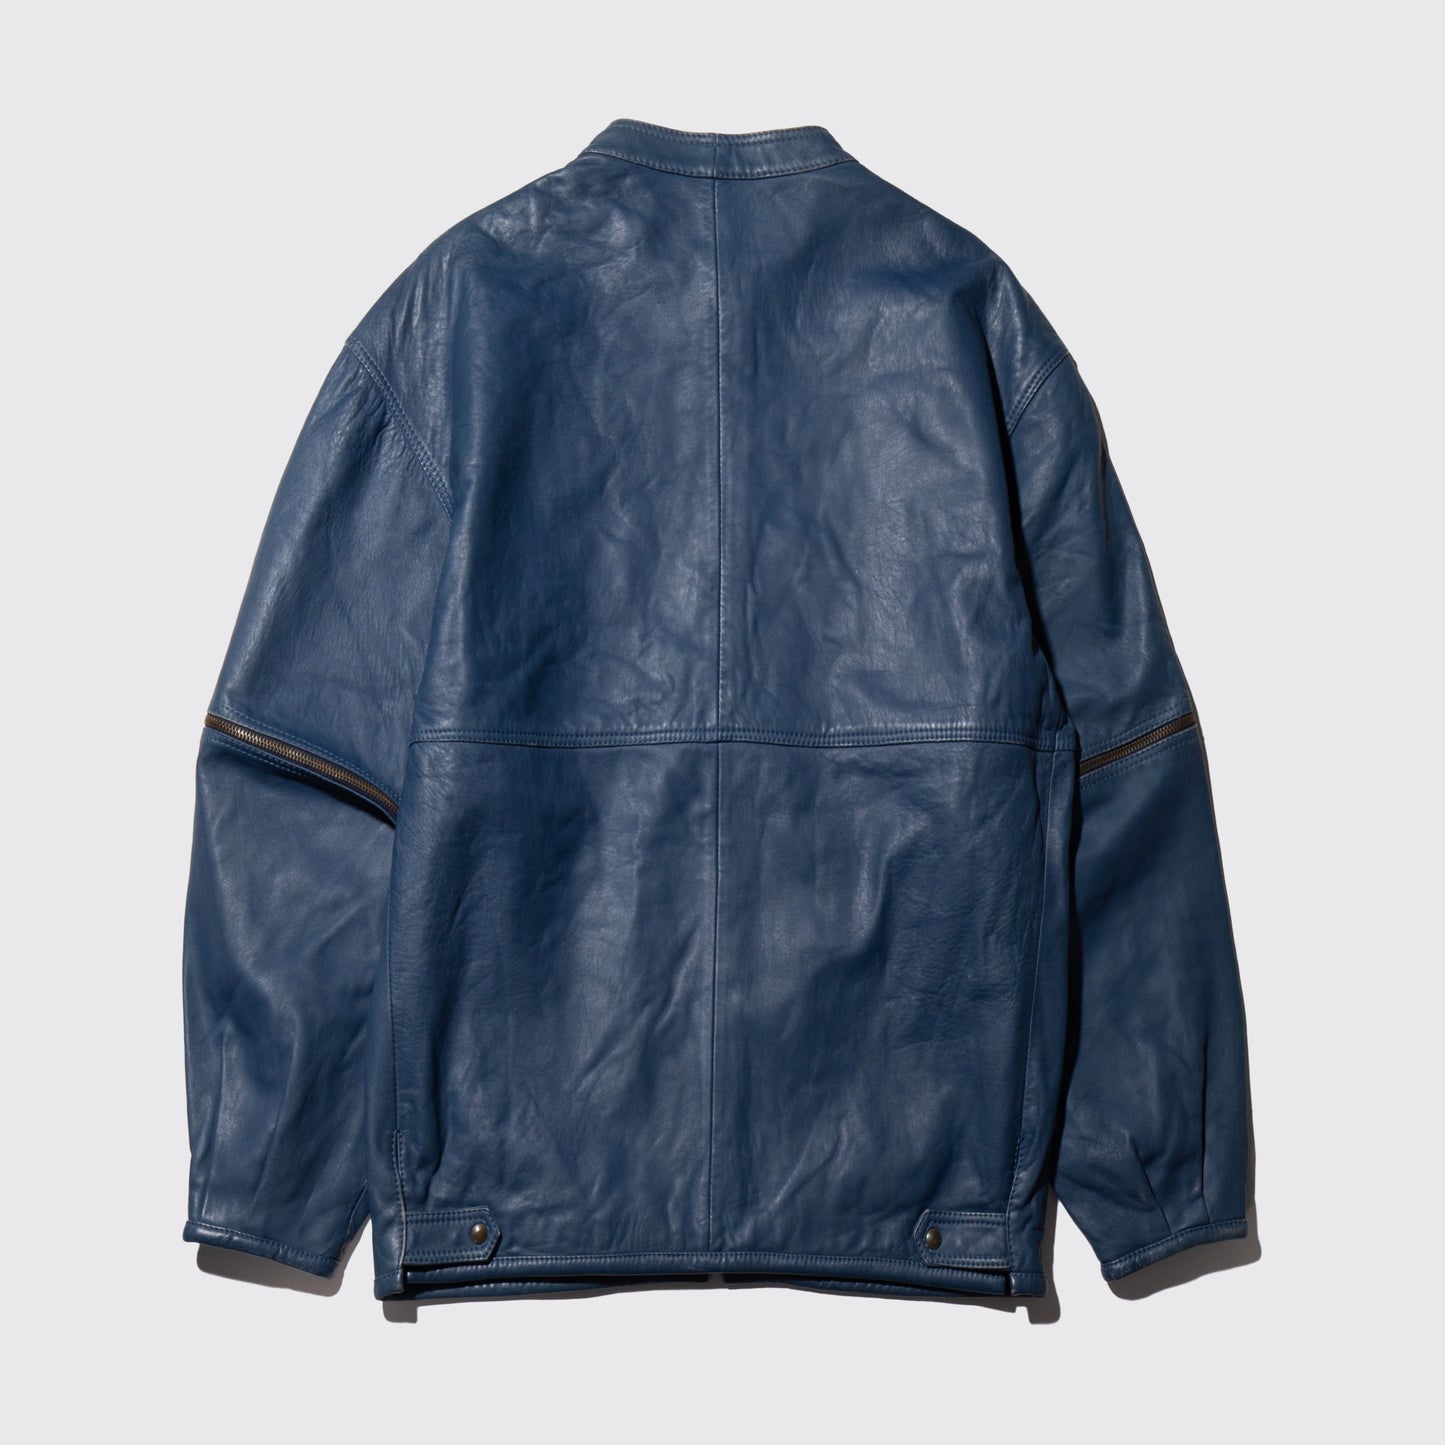 vintage euro single leather jacket , detachable sleeve